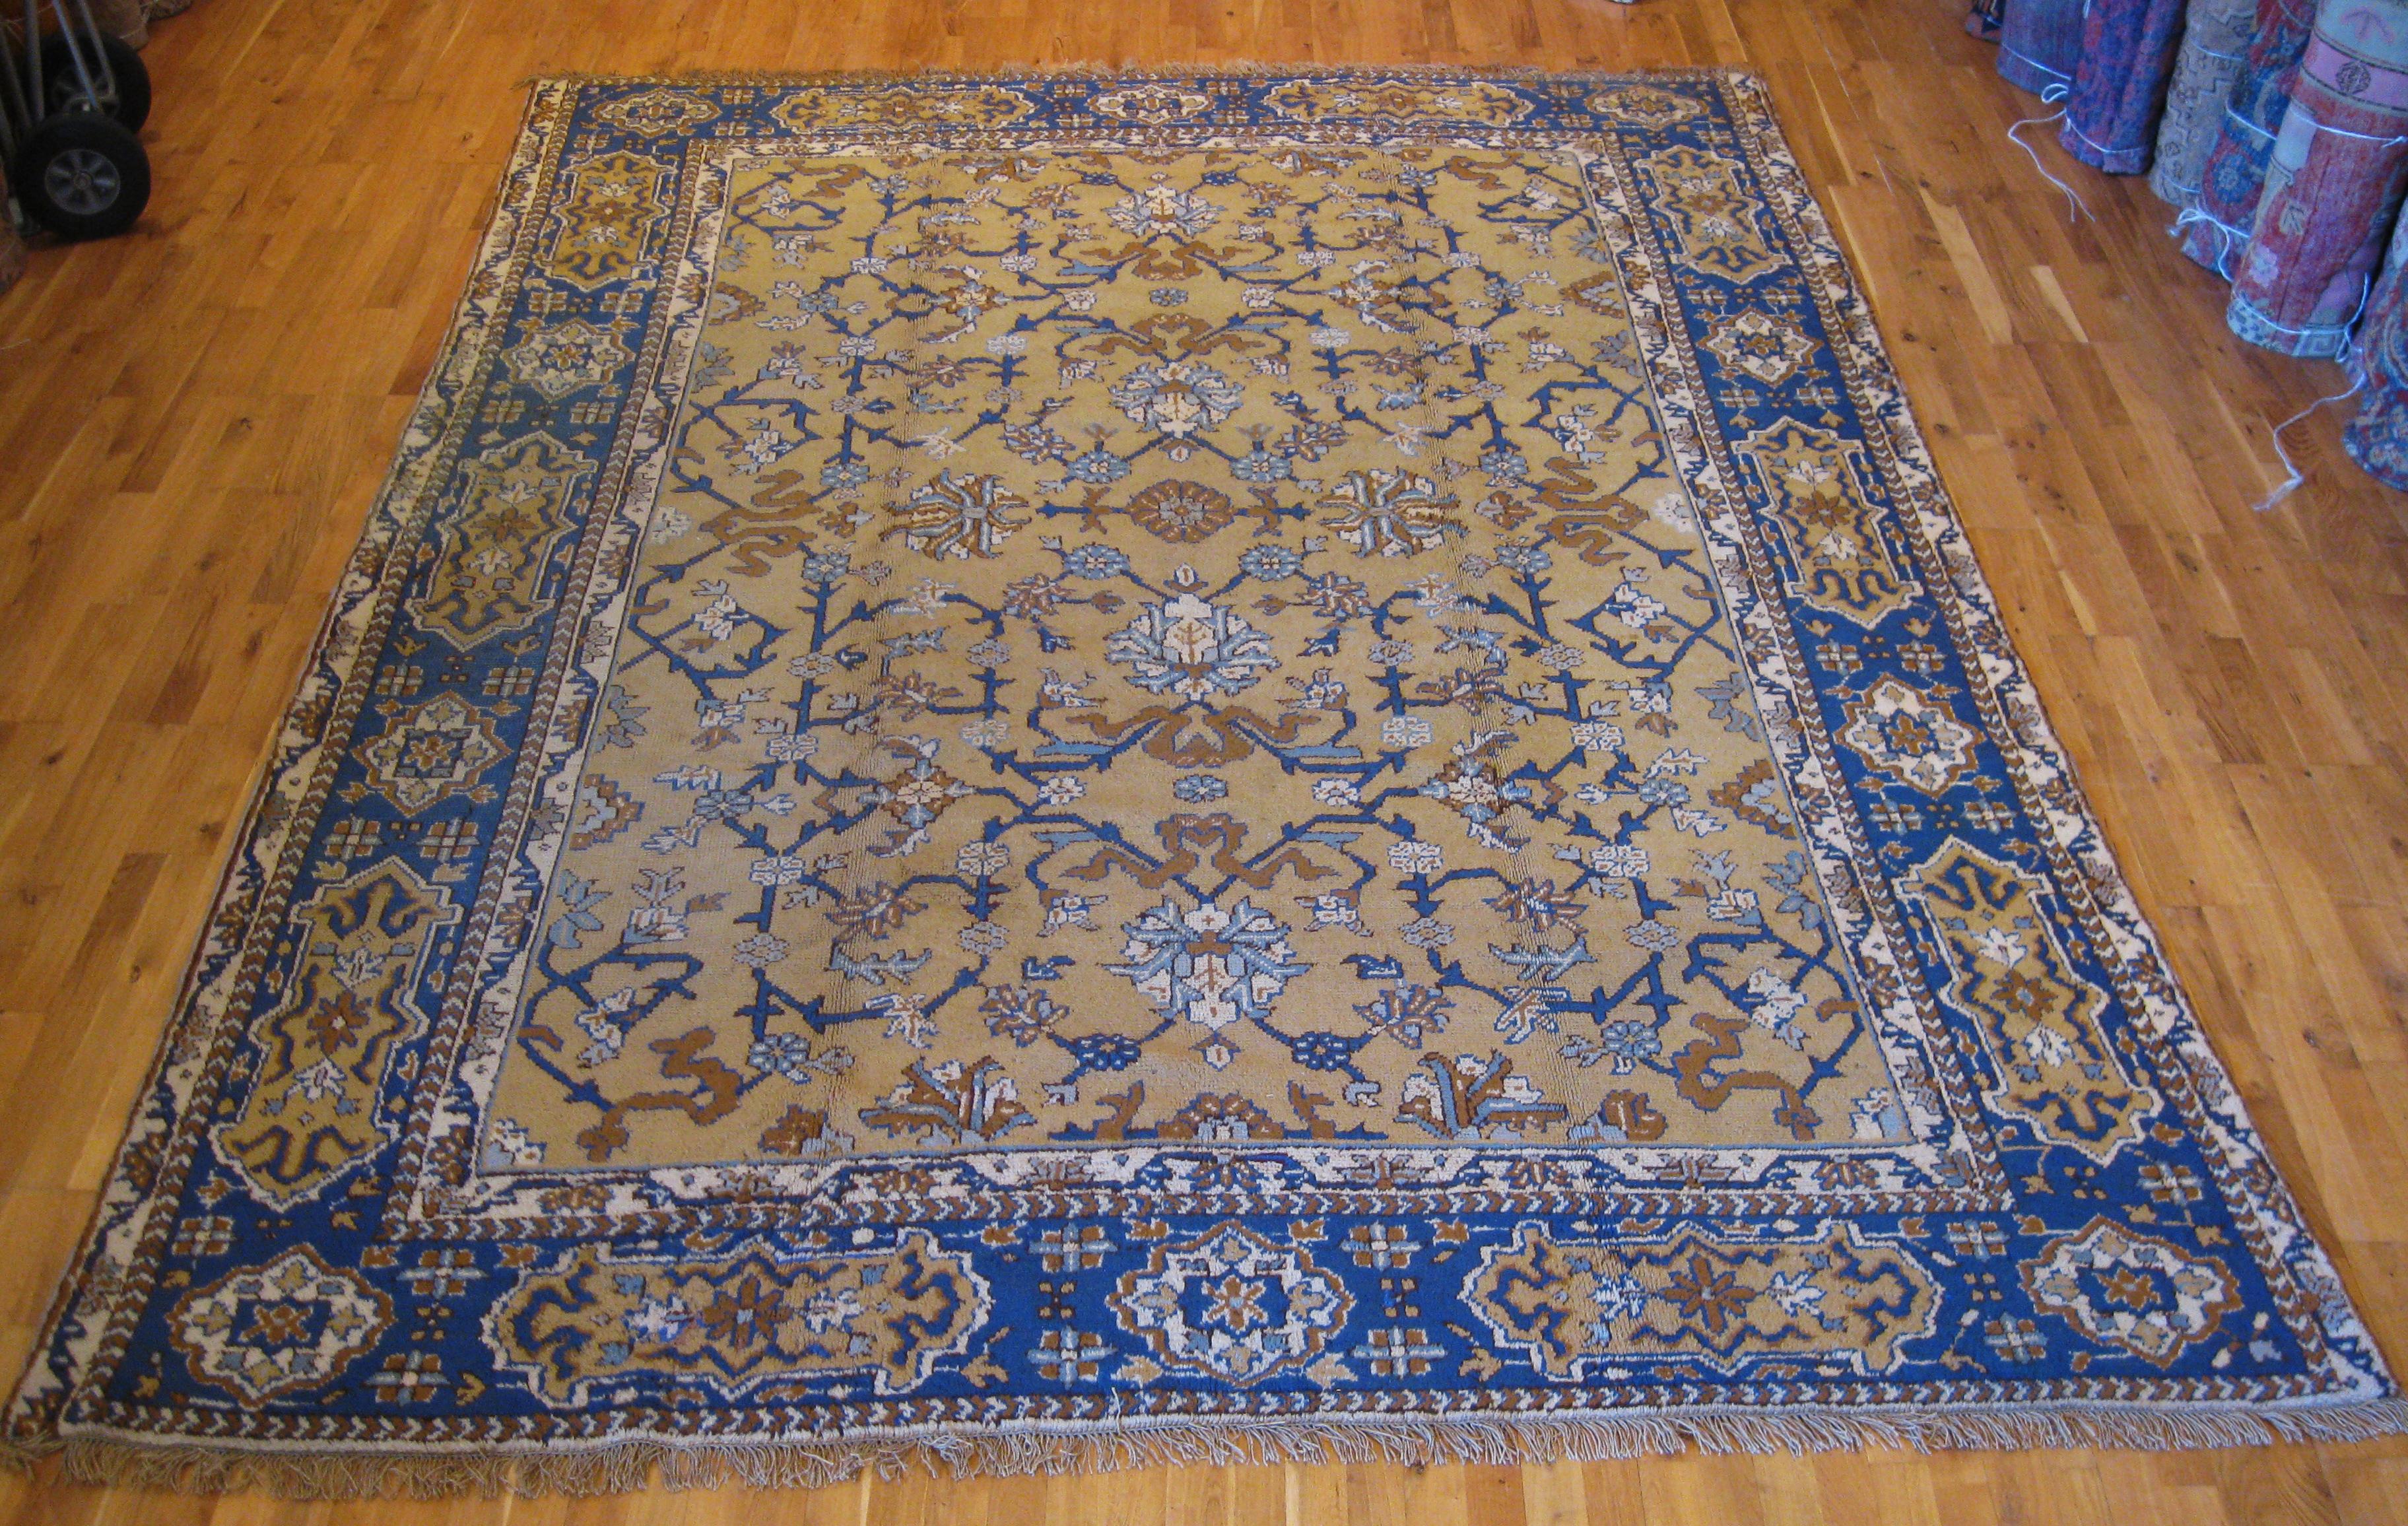 Antique Turkish rug

Measurement: 8'10